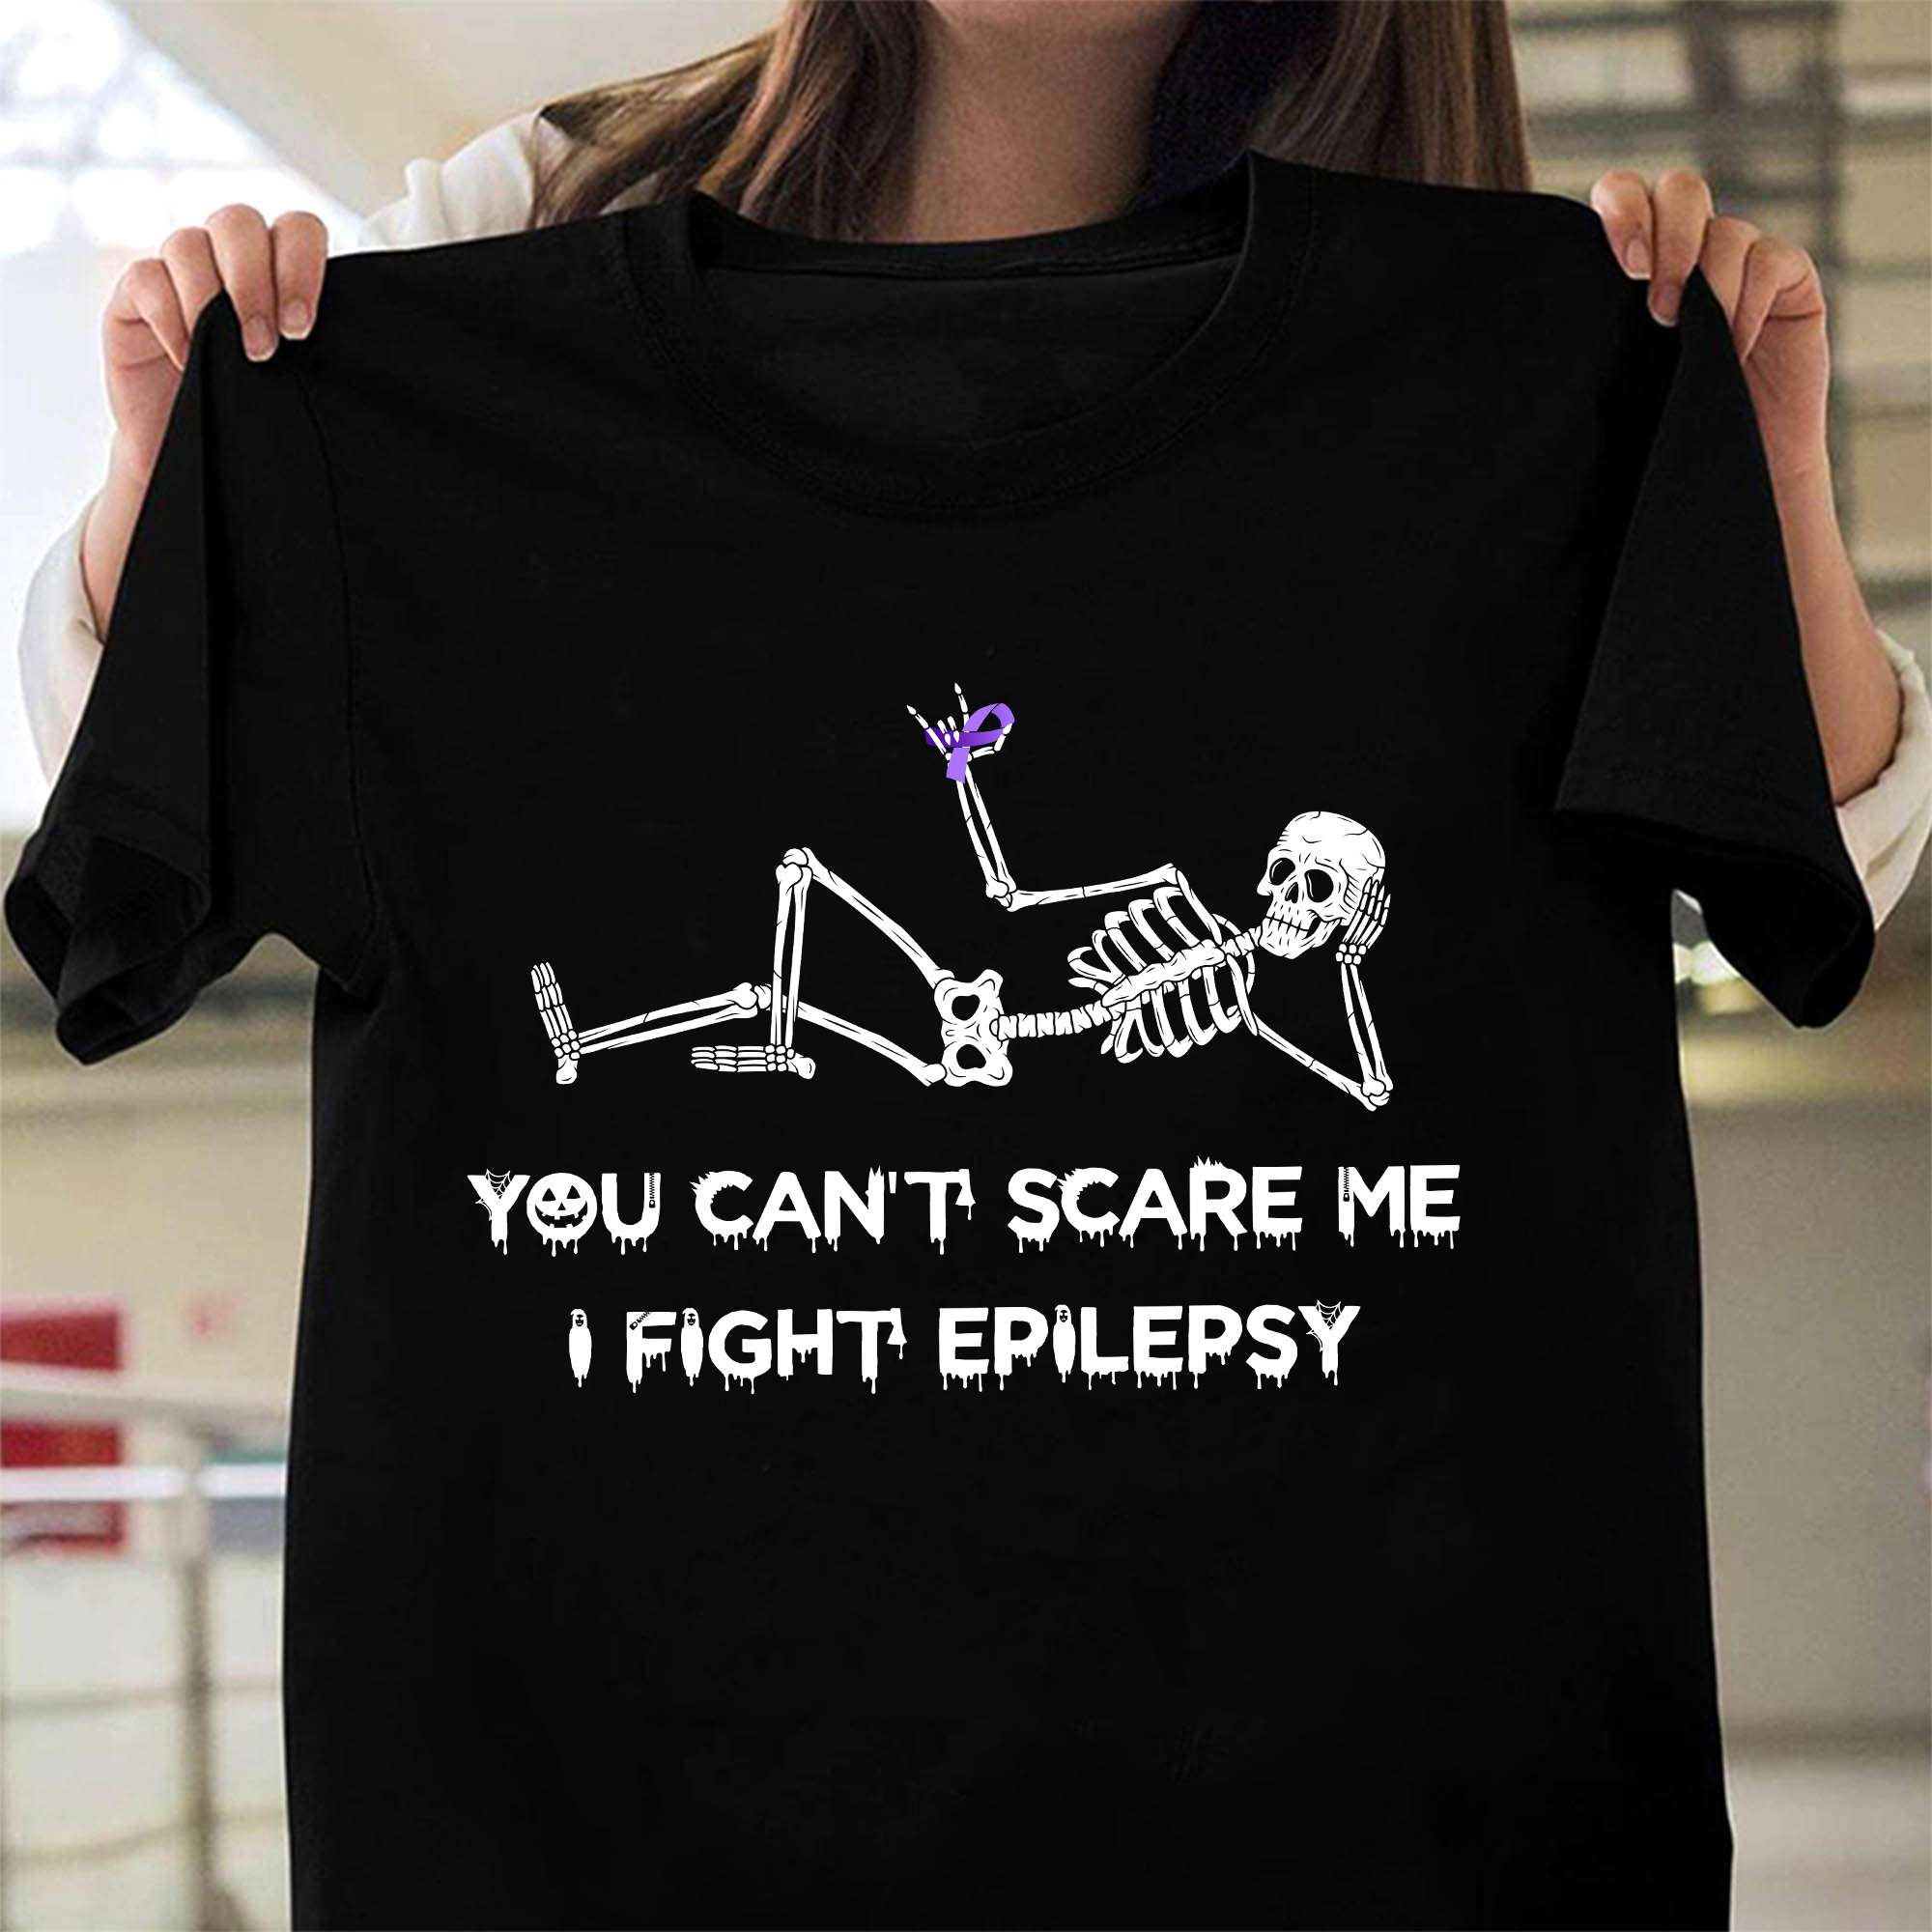 You can't scare me I fight epilepsy - Epilepsy awareness, skull cancer ribbon